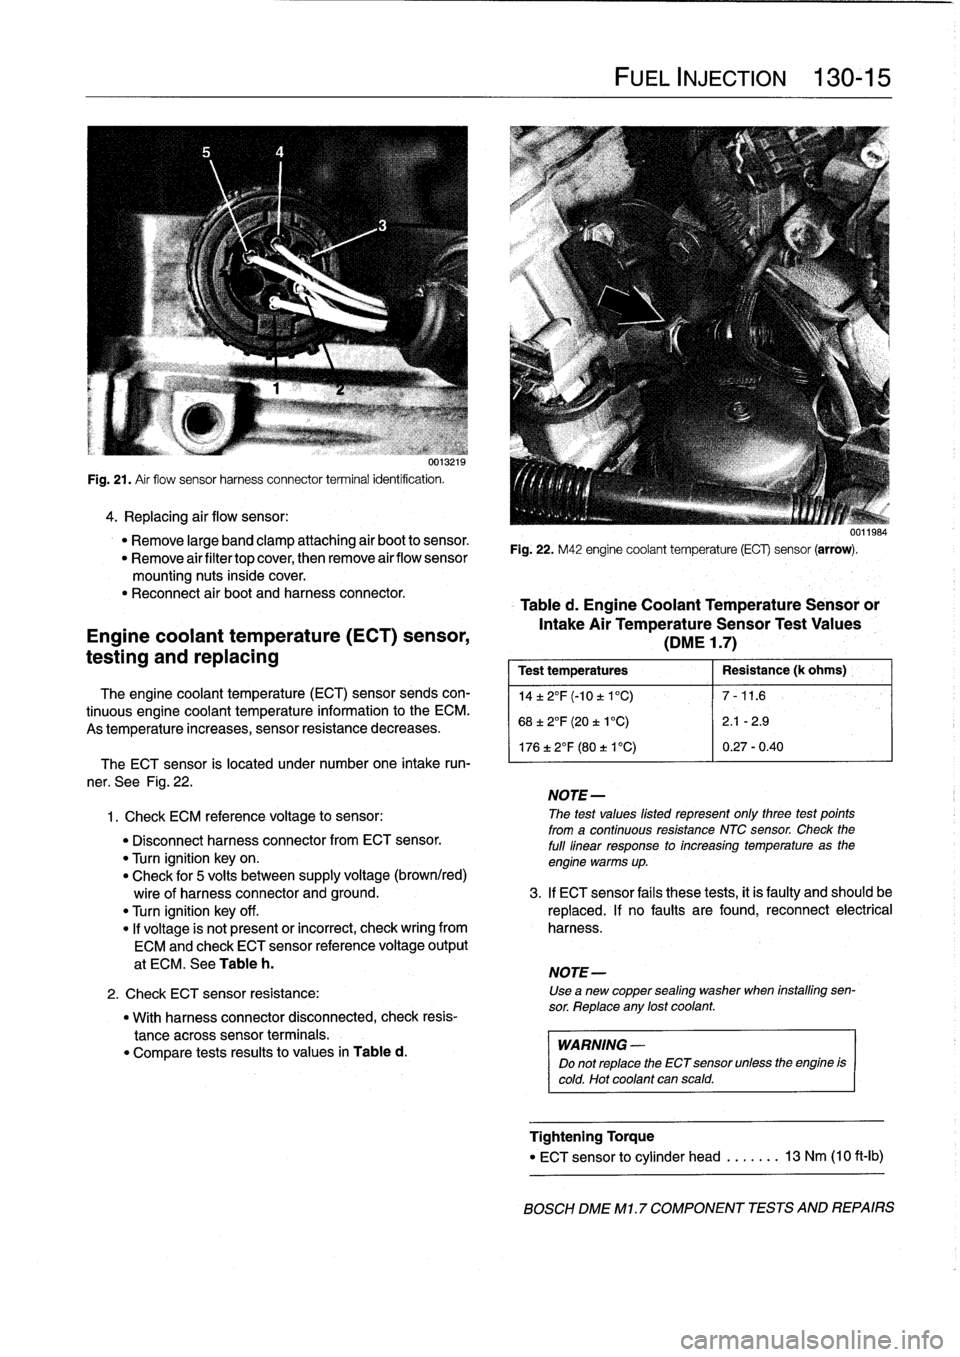 BMW 323i 1993 E36 Repair Manual u0
I
.[
Ia

Fig
.
21
.
Air
flow
sensor
harness
connector
terminal
identification
.

4
.
Replacing
air
flow
sensor
:

"
Remove
large
band
clamp
attaching
air
boot
to
sensor
.

"
Remove
airfiltertop
cov